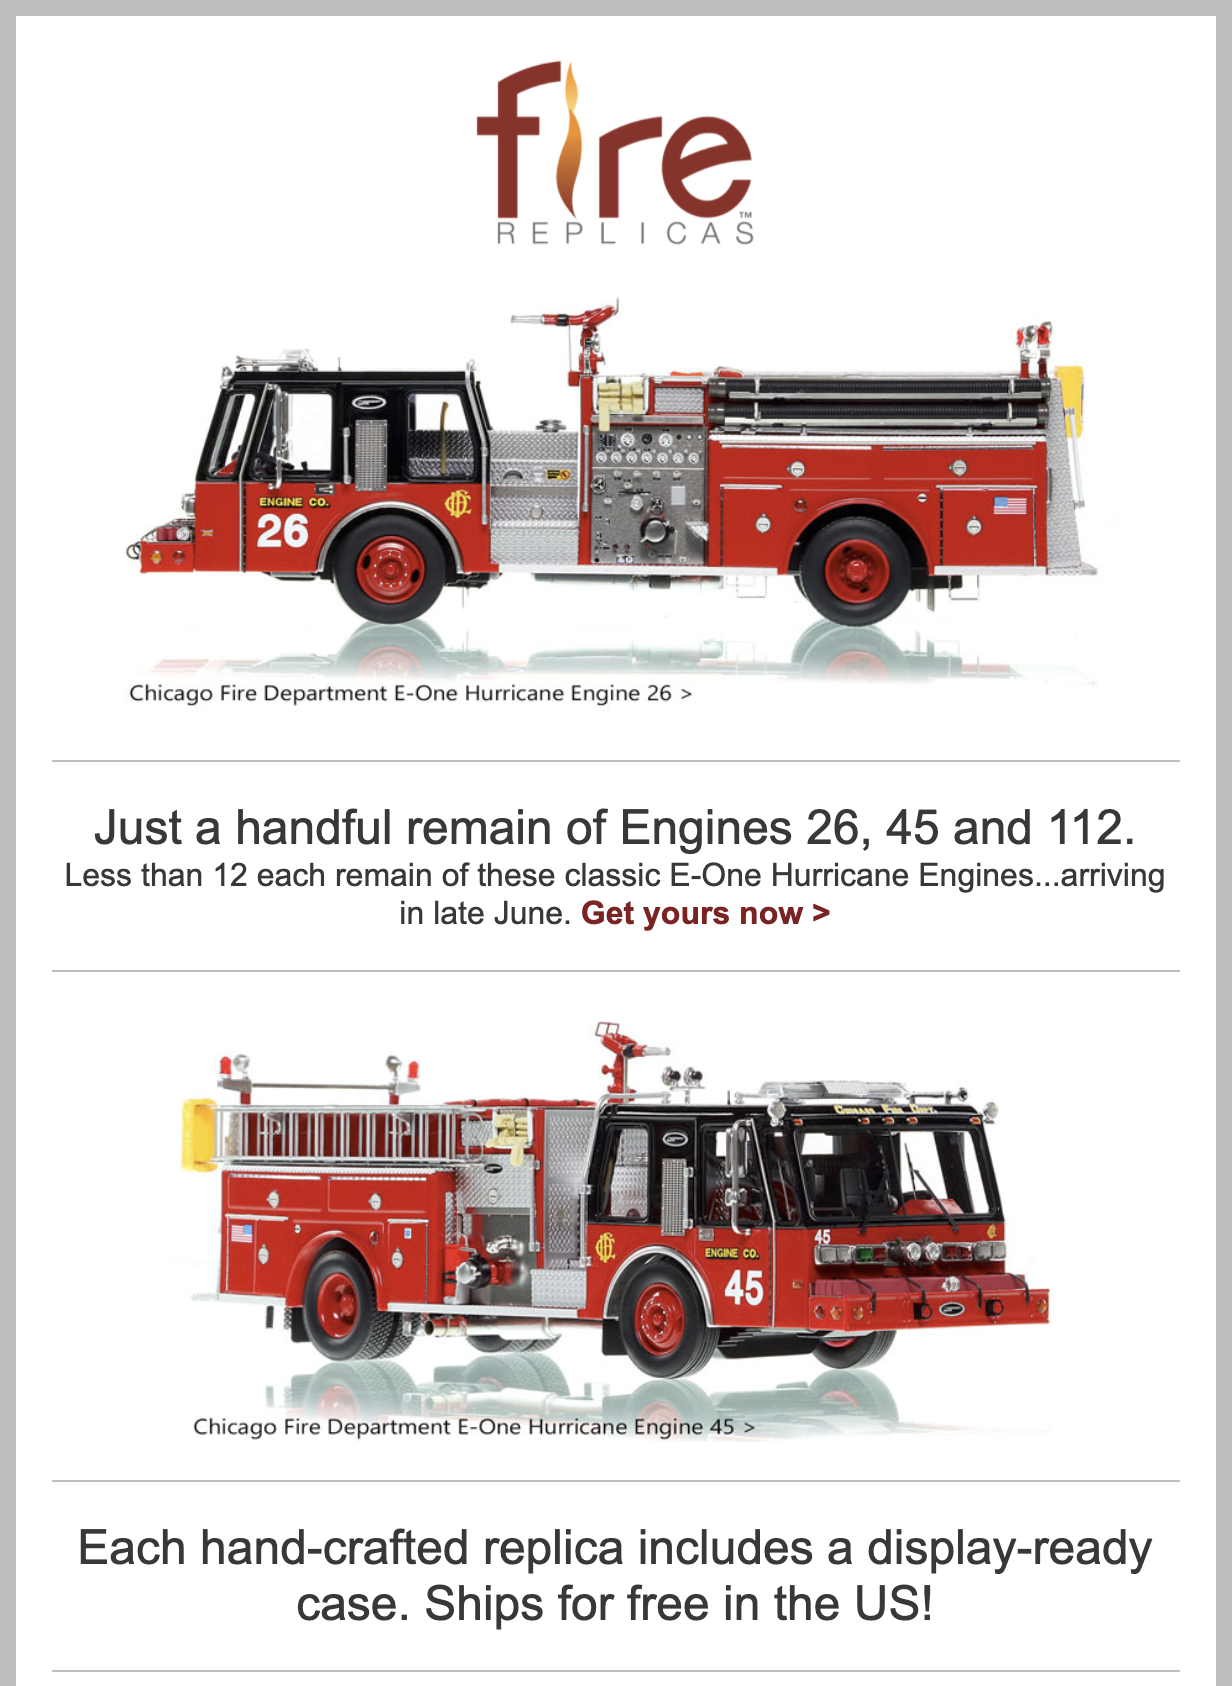 Fire Replicas 1985 E-ONE Hurricane fire engines in Chicago